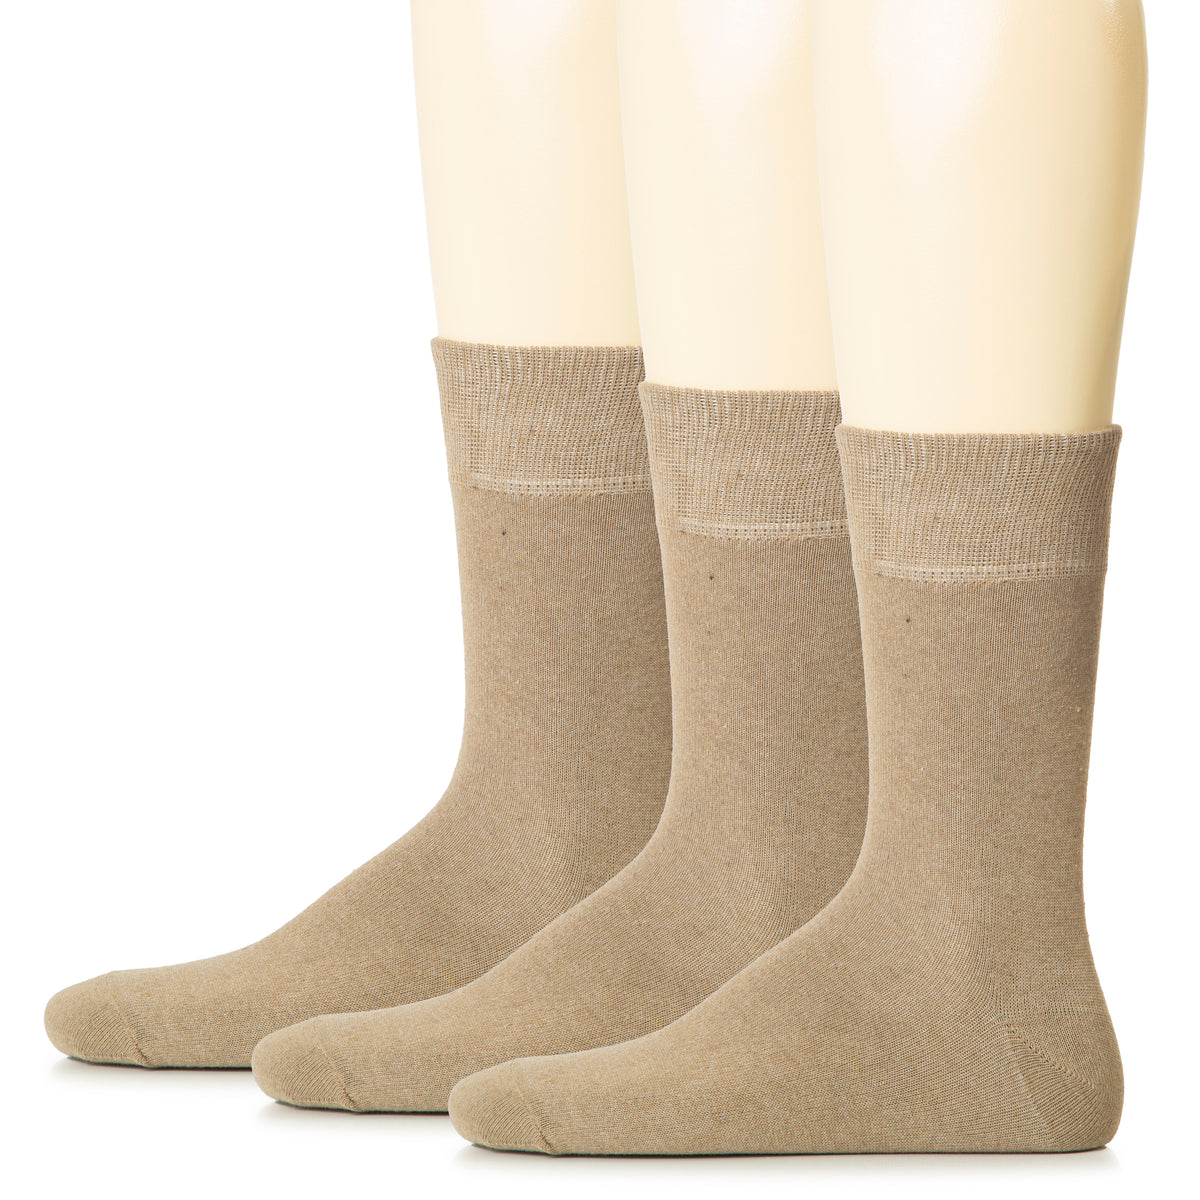 Hugh Ugoli Men Cotton Dress Socks XL / L / M / S Sizes, 3 Pairs | Shoe Size: 13-15 | Dark Beige